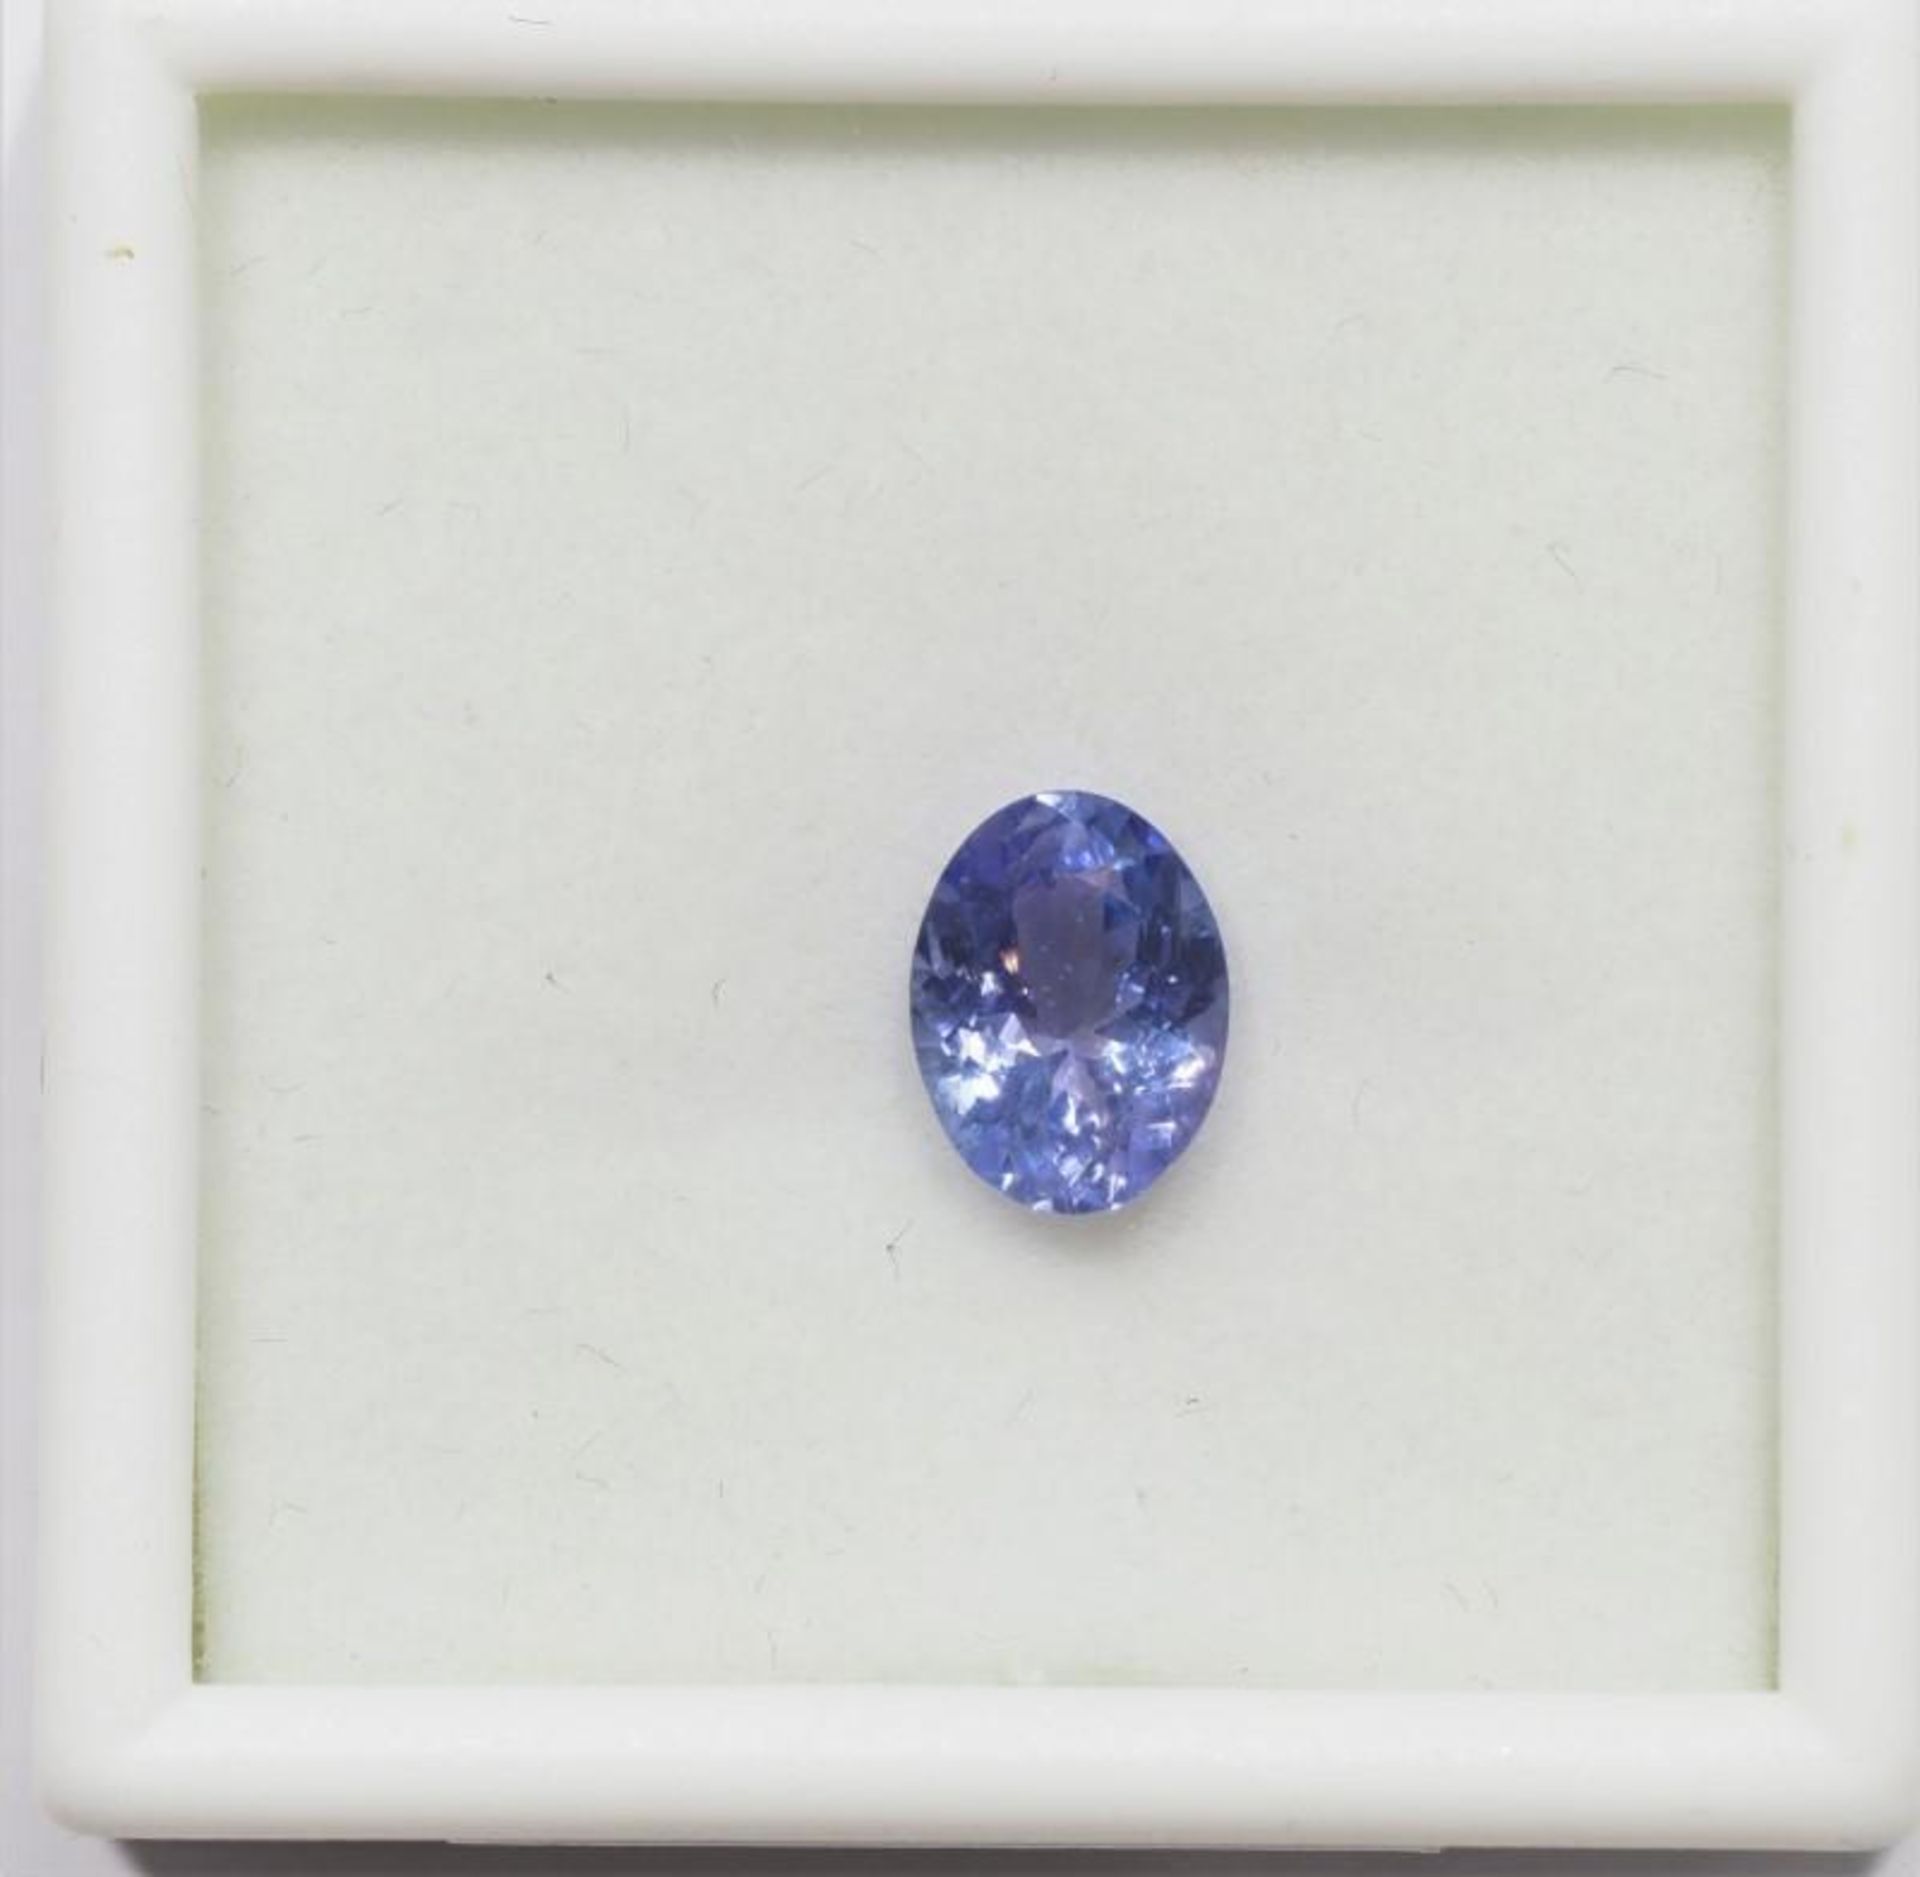 Genuine Tanzanite (December Birthstone) Gemstone Approx. 1.2ct. Retail $600 - Image 2 of 2